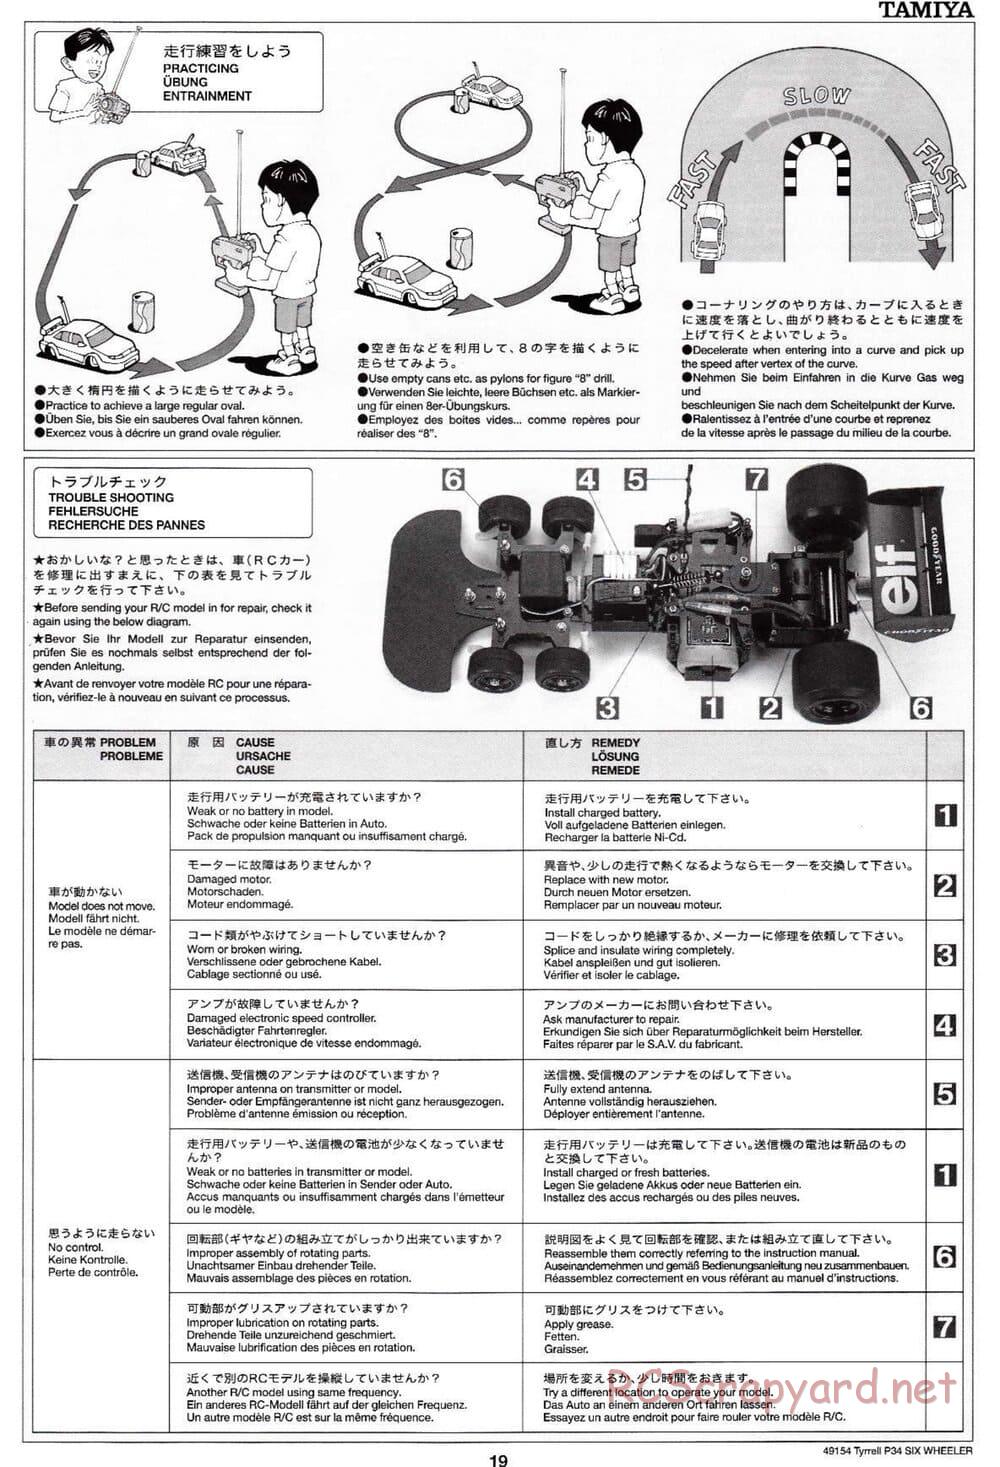 Tamiya - Tyrrell P34 Six Wheeler - F103-6W Chassis - Manual - Page 19